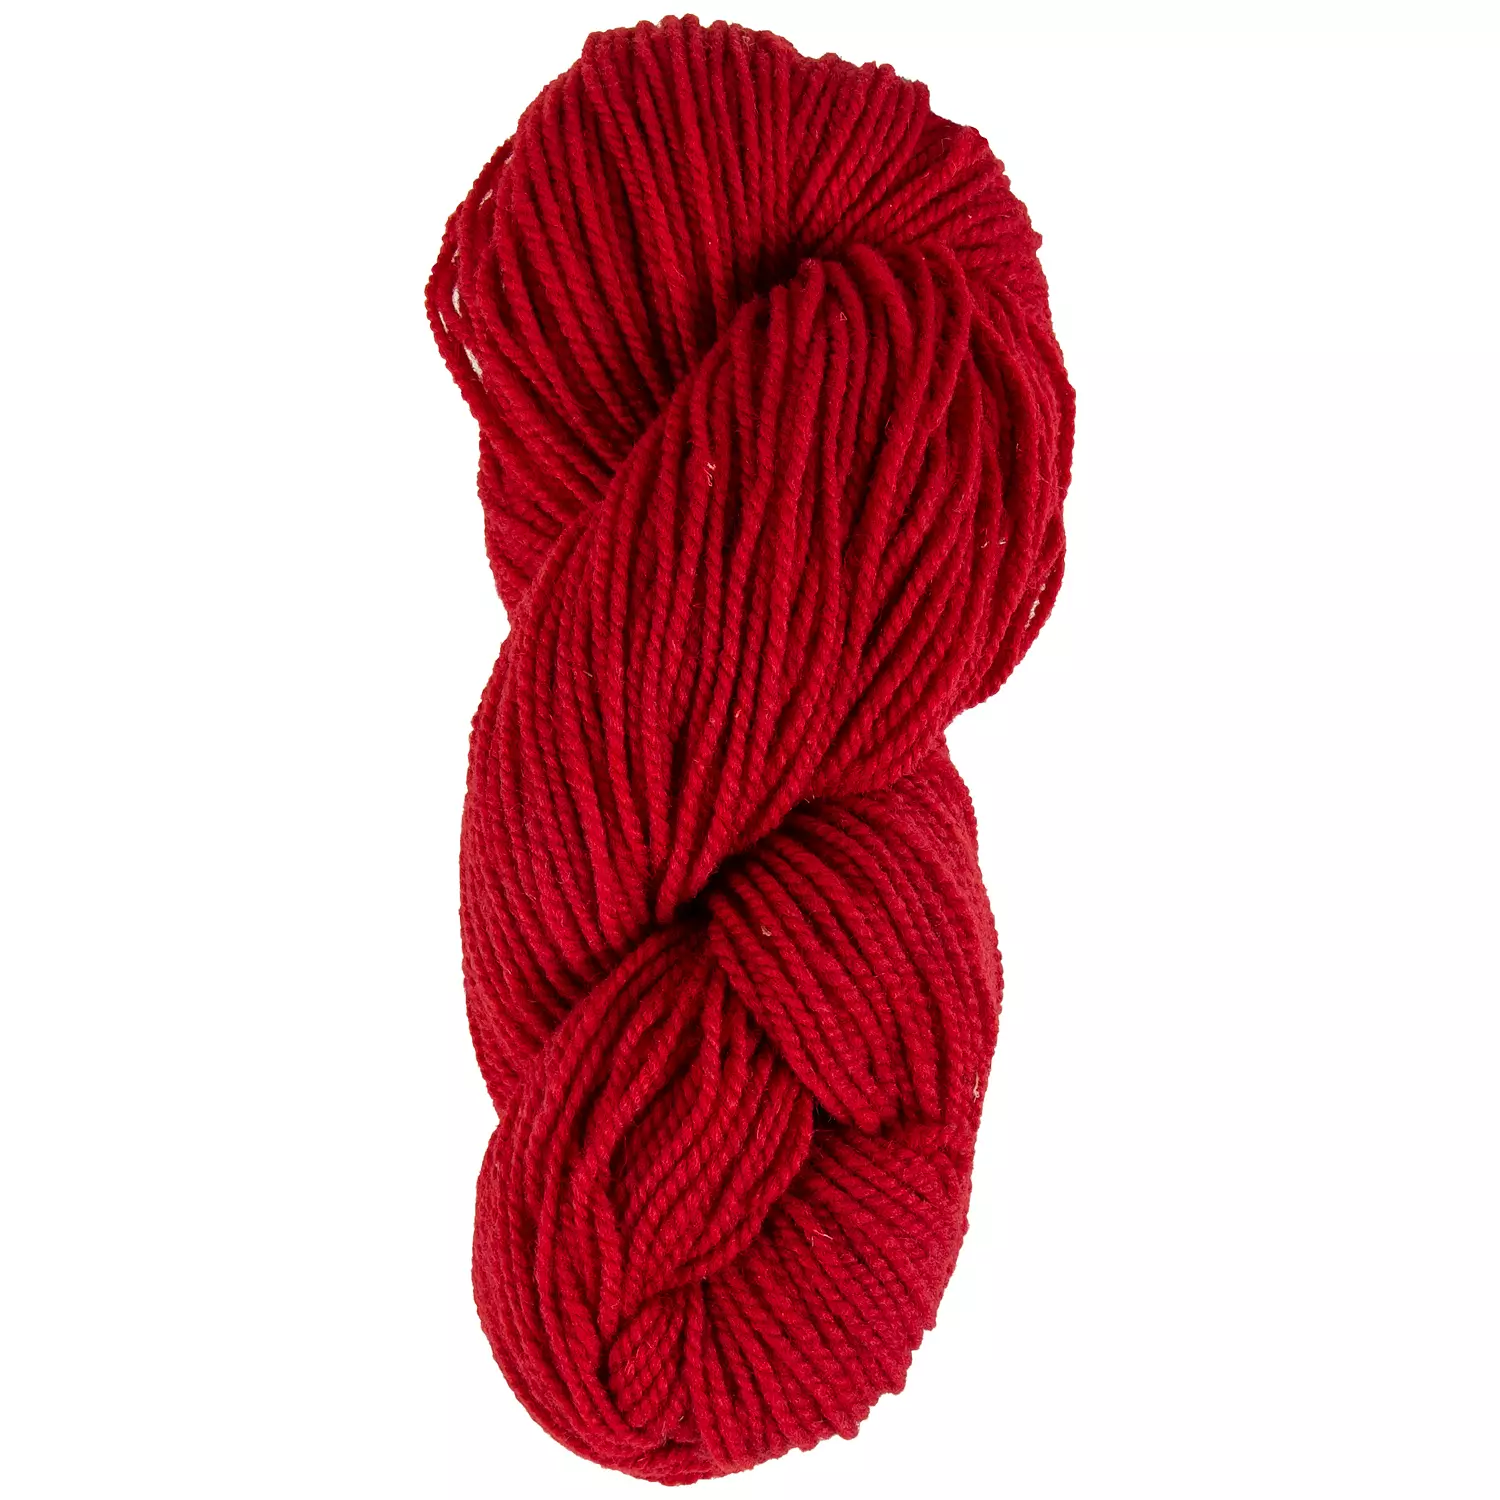 Briggs & Little - Heritage, 100% wool, 2-ply yarn, red